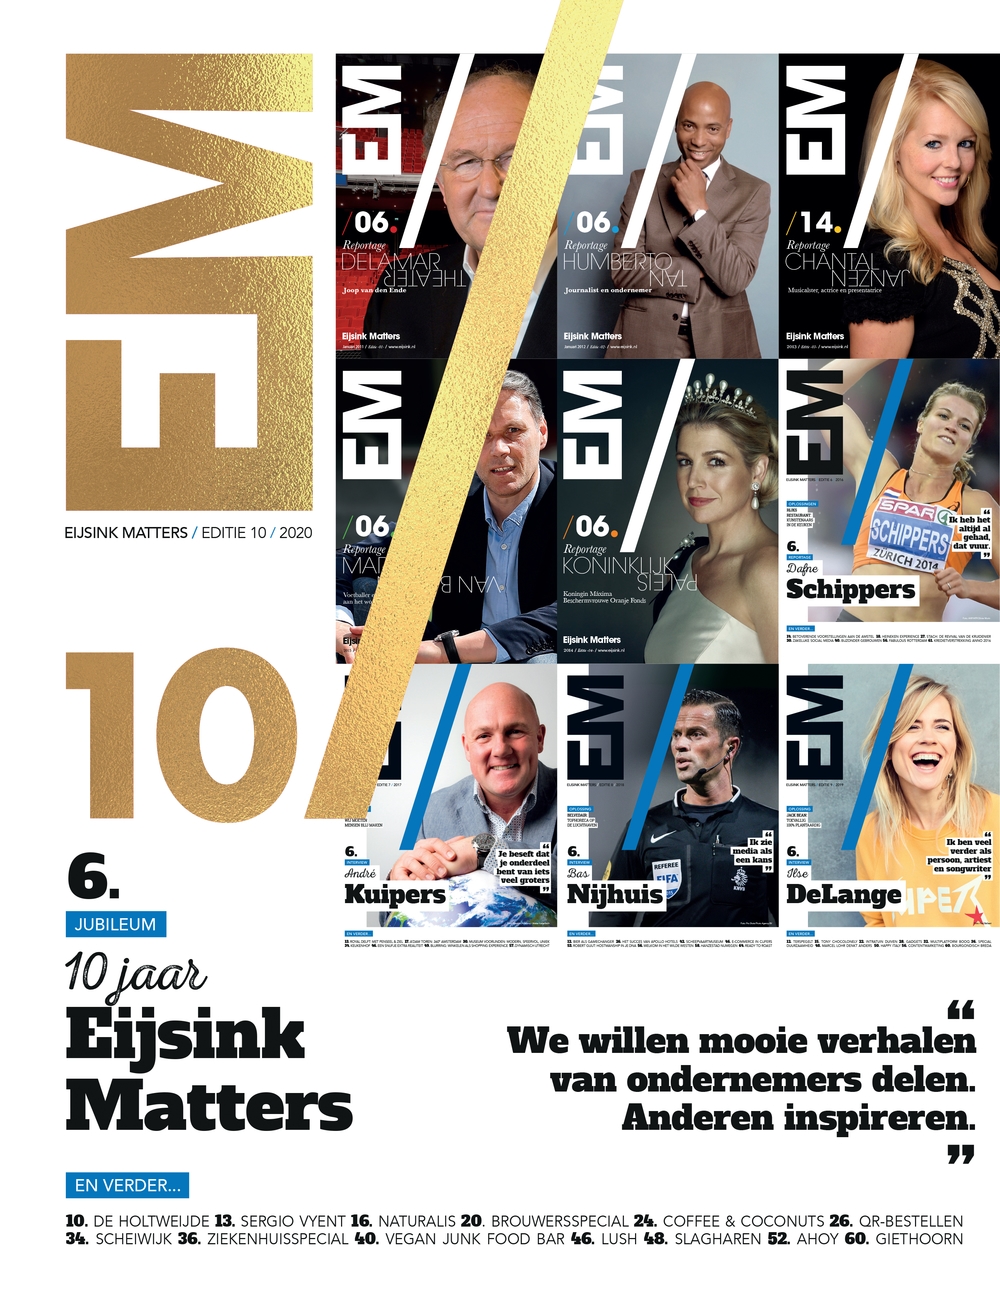 Eijsink Matters #10